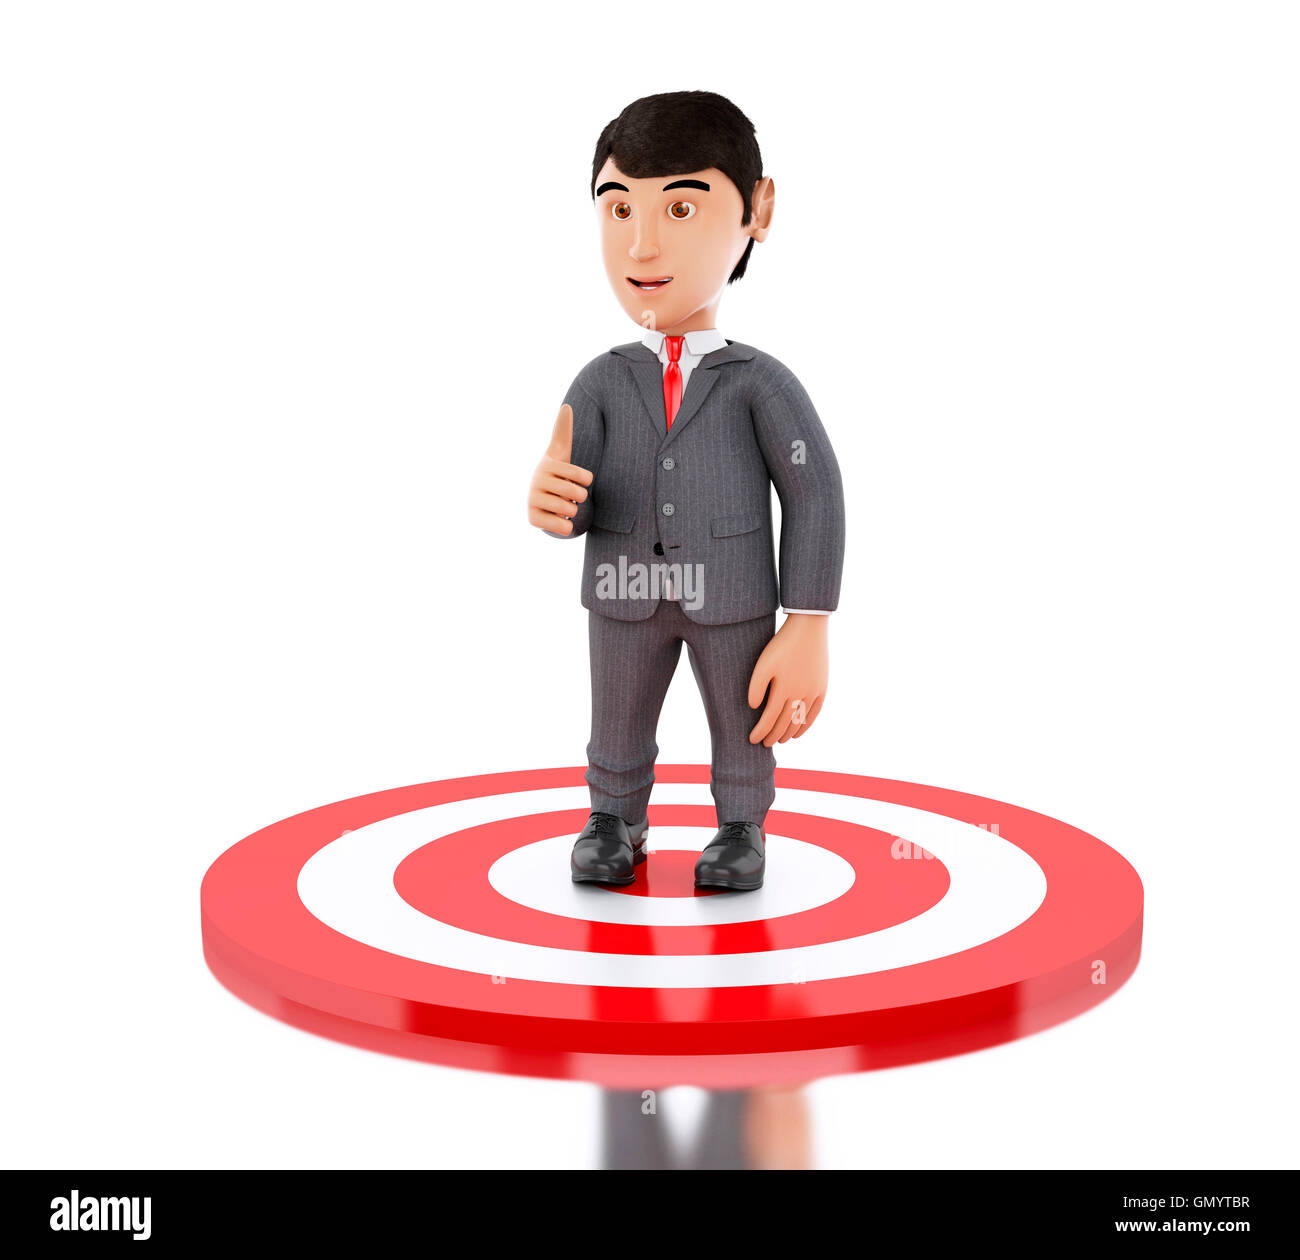 https://c8.alamy.com/comp/GMYTBR/3d-illustration-businessman-showing-thumb-up-standing-on-target-business-GMYTBR.jpg